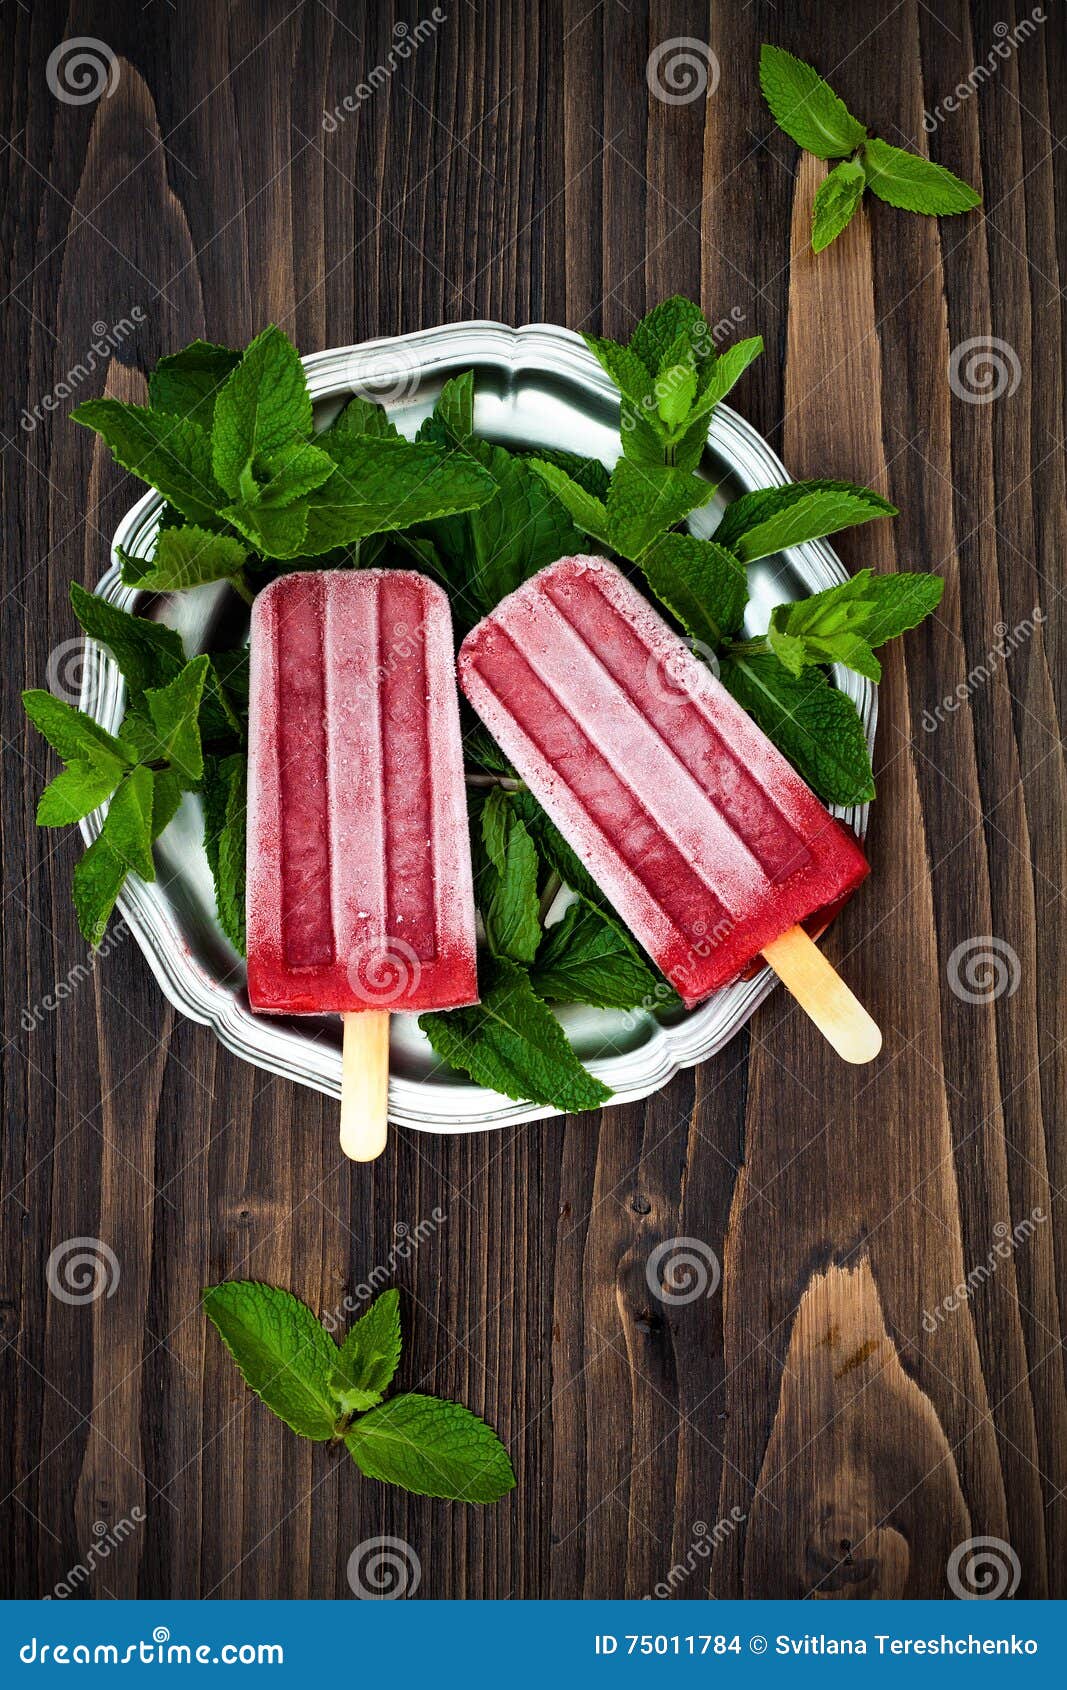 homemade strawberry mint - ice pops - popsicles - paletas.